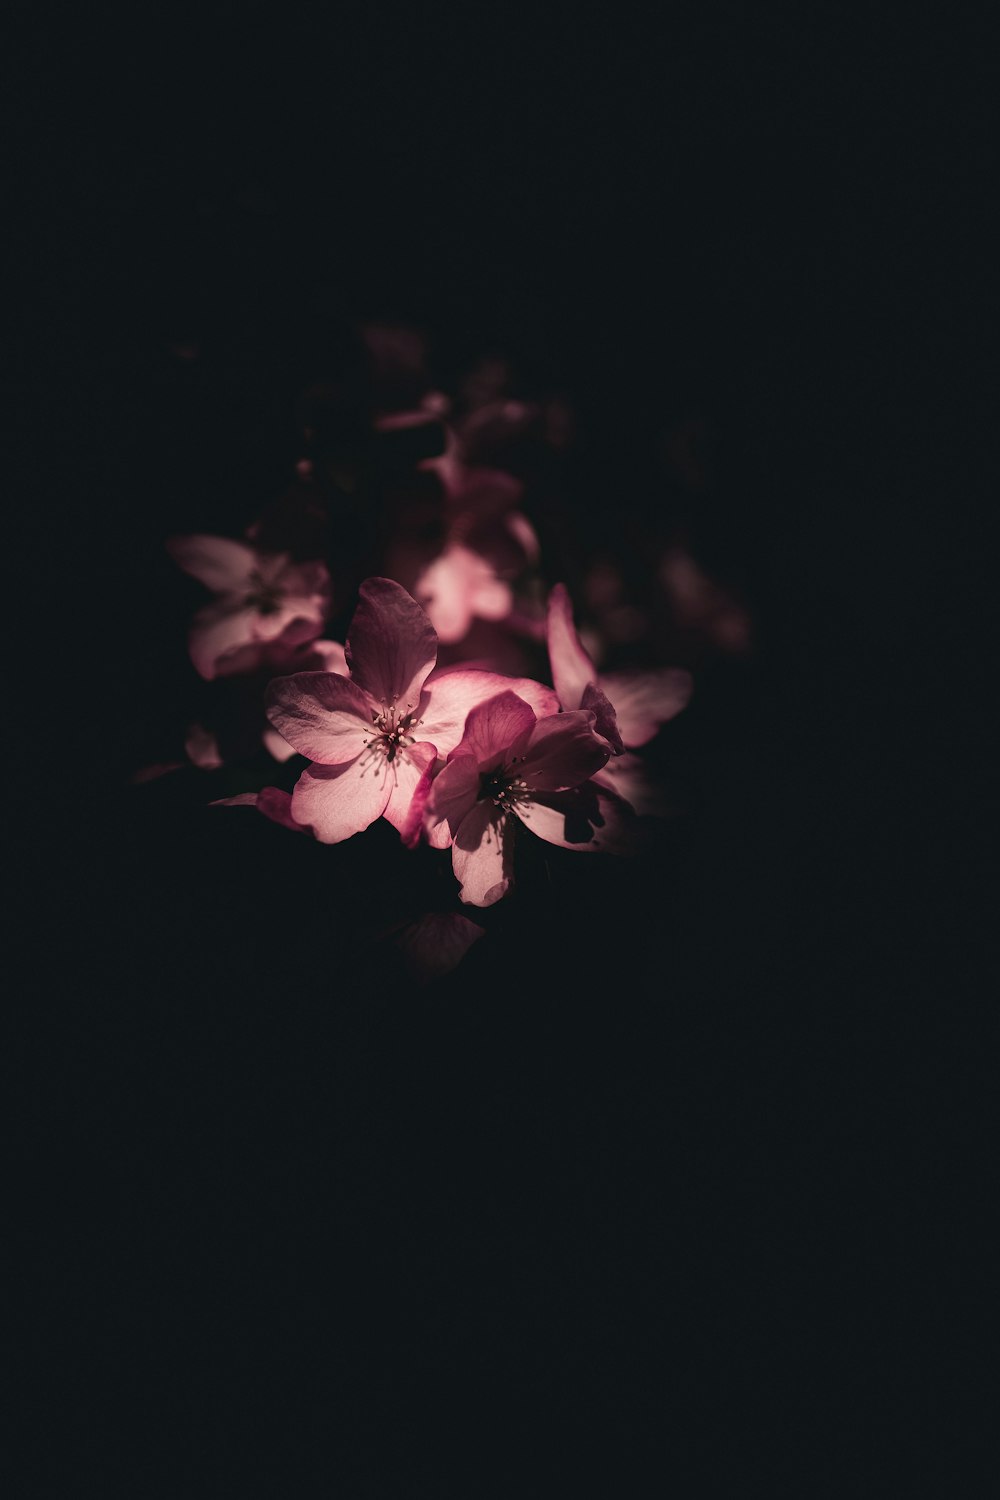 750+ Dark Flower Pictures | Download Free Images on Unsplash